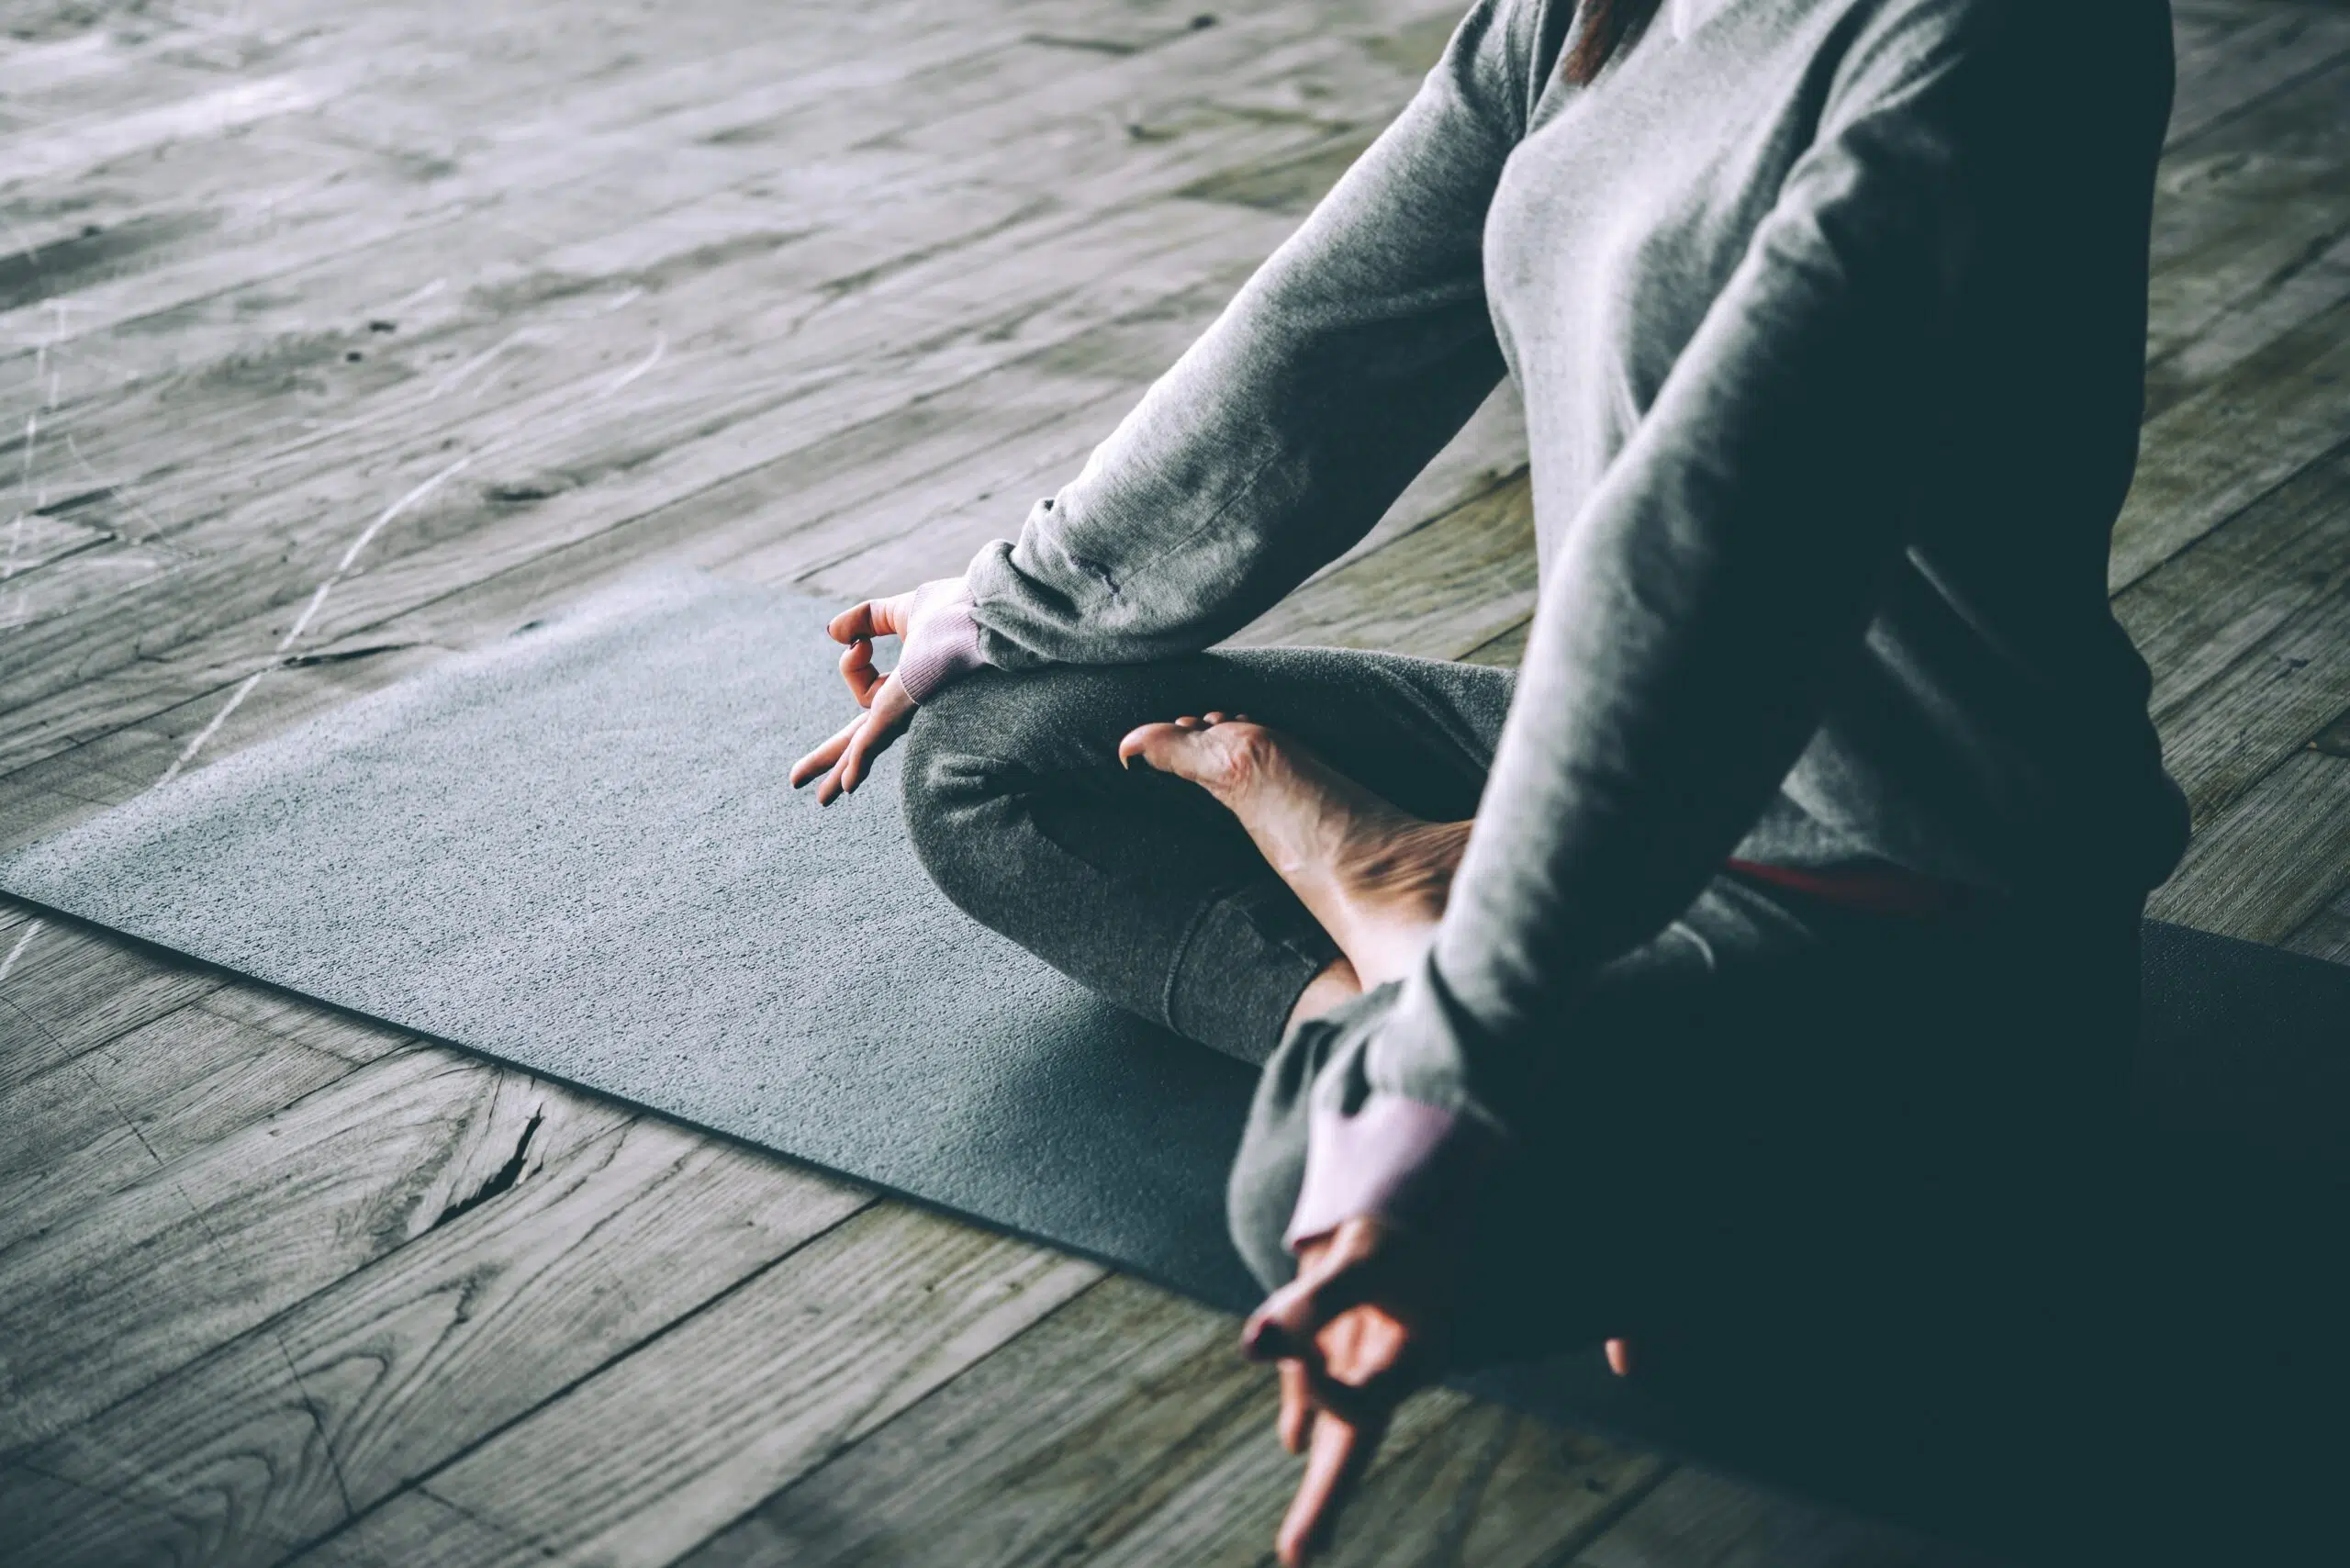 Is Yoga Used in Rehab?